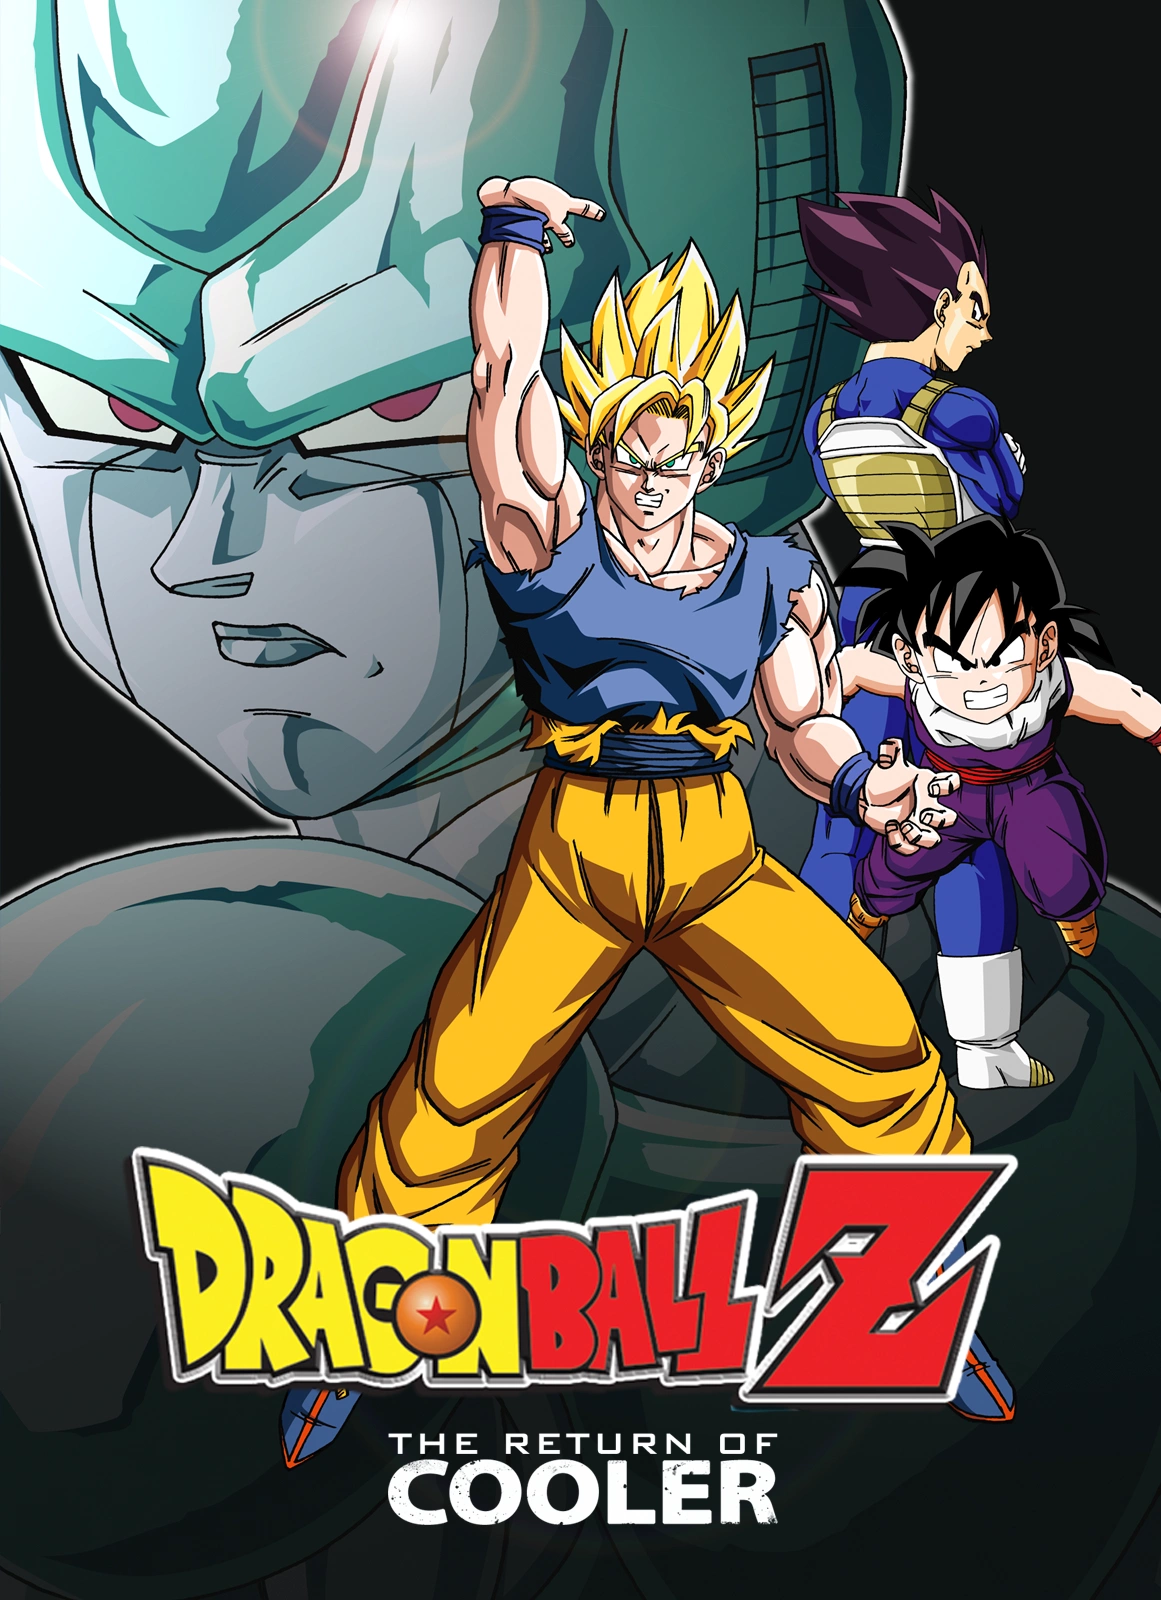 Dragon Ball Z e outros animes chegam dublados na Crunchyroll